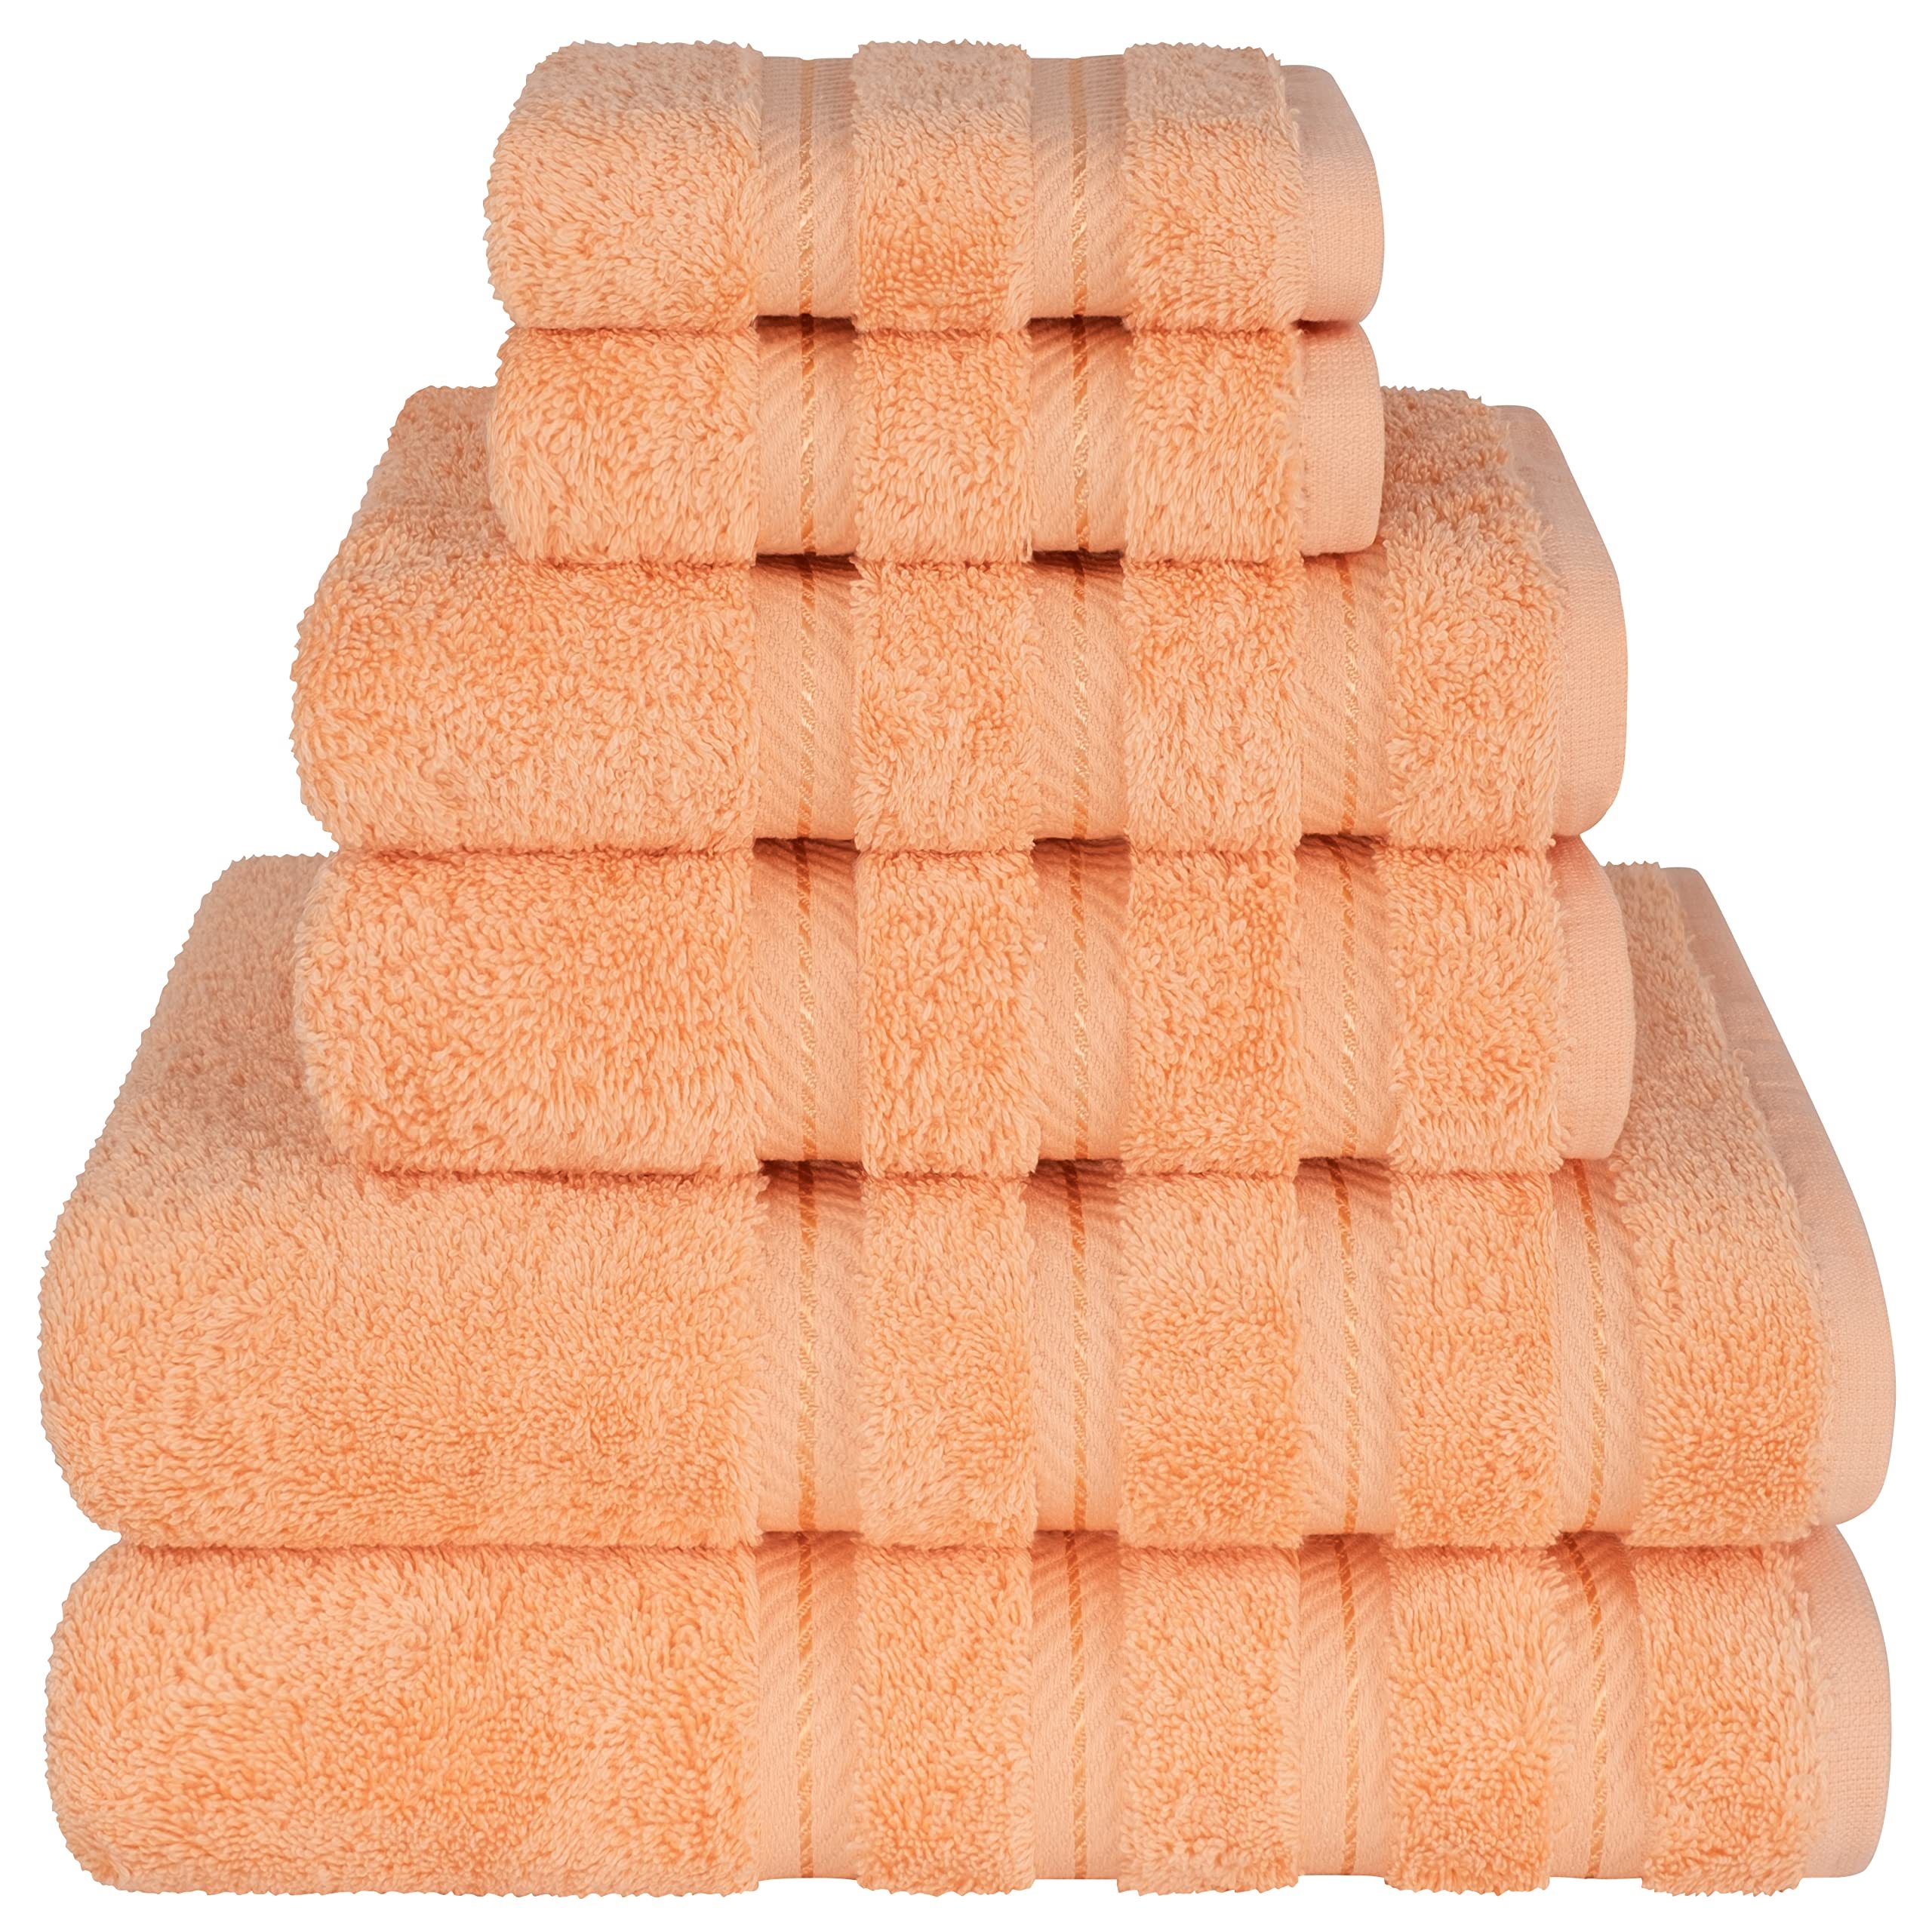 Towel Sets, 2 Bath Towels 2 Hand Towels 2 Washcloths, Pure Cotton